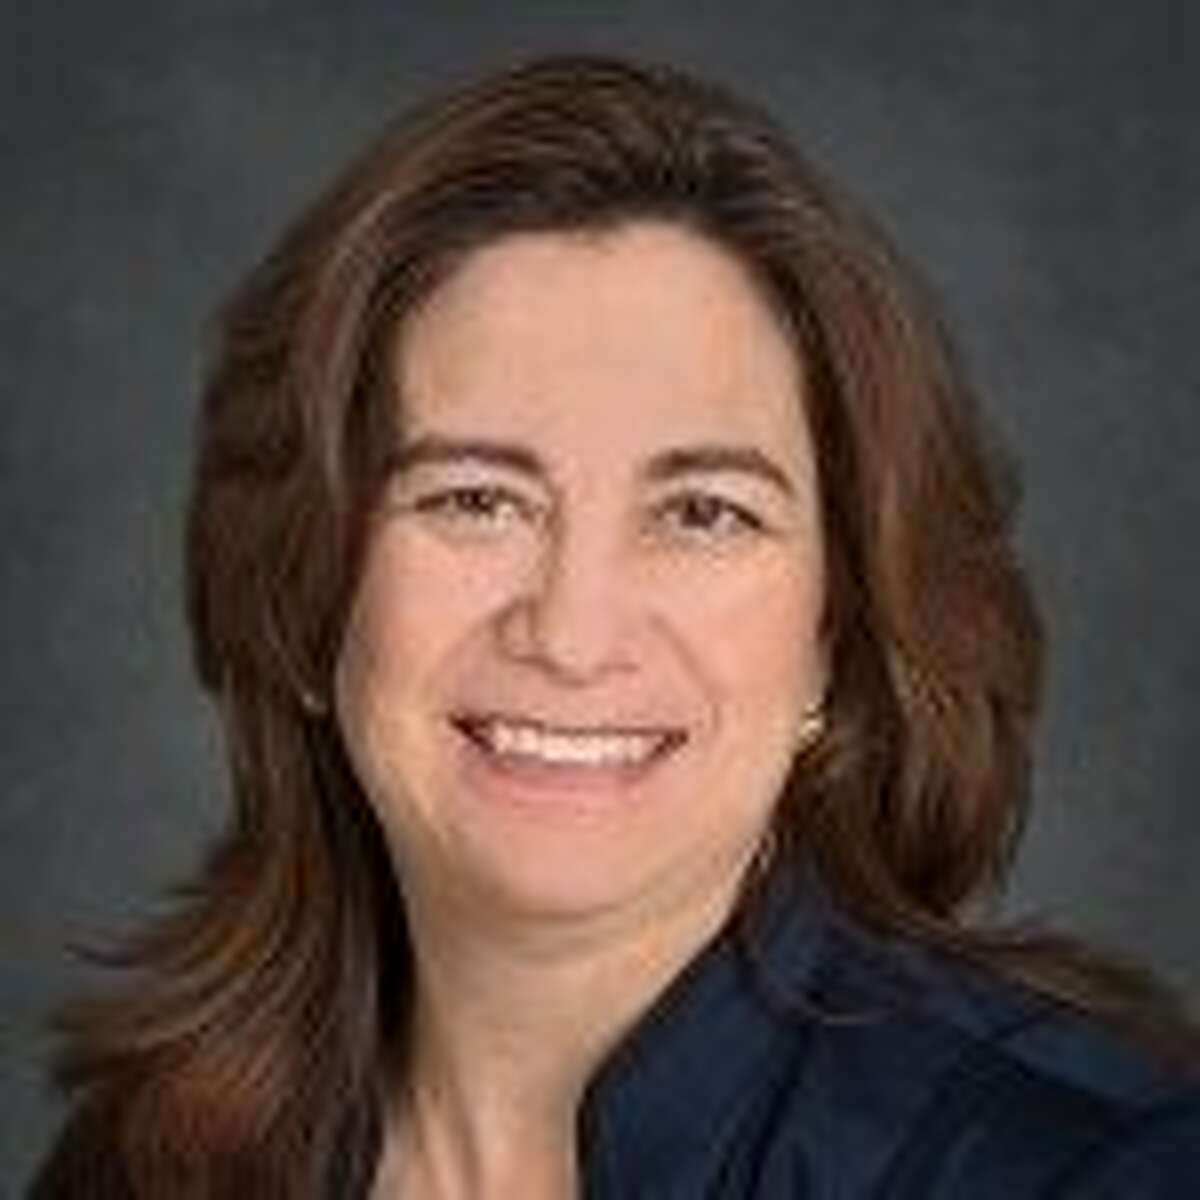 Former UC Assistant Vice Chancellor Diane Leite